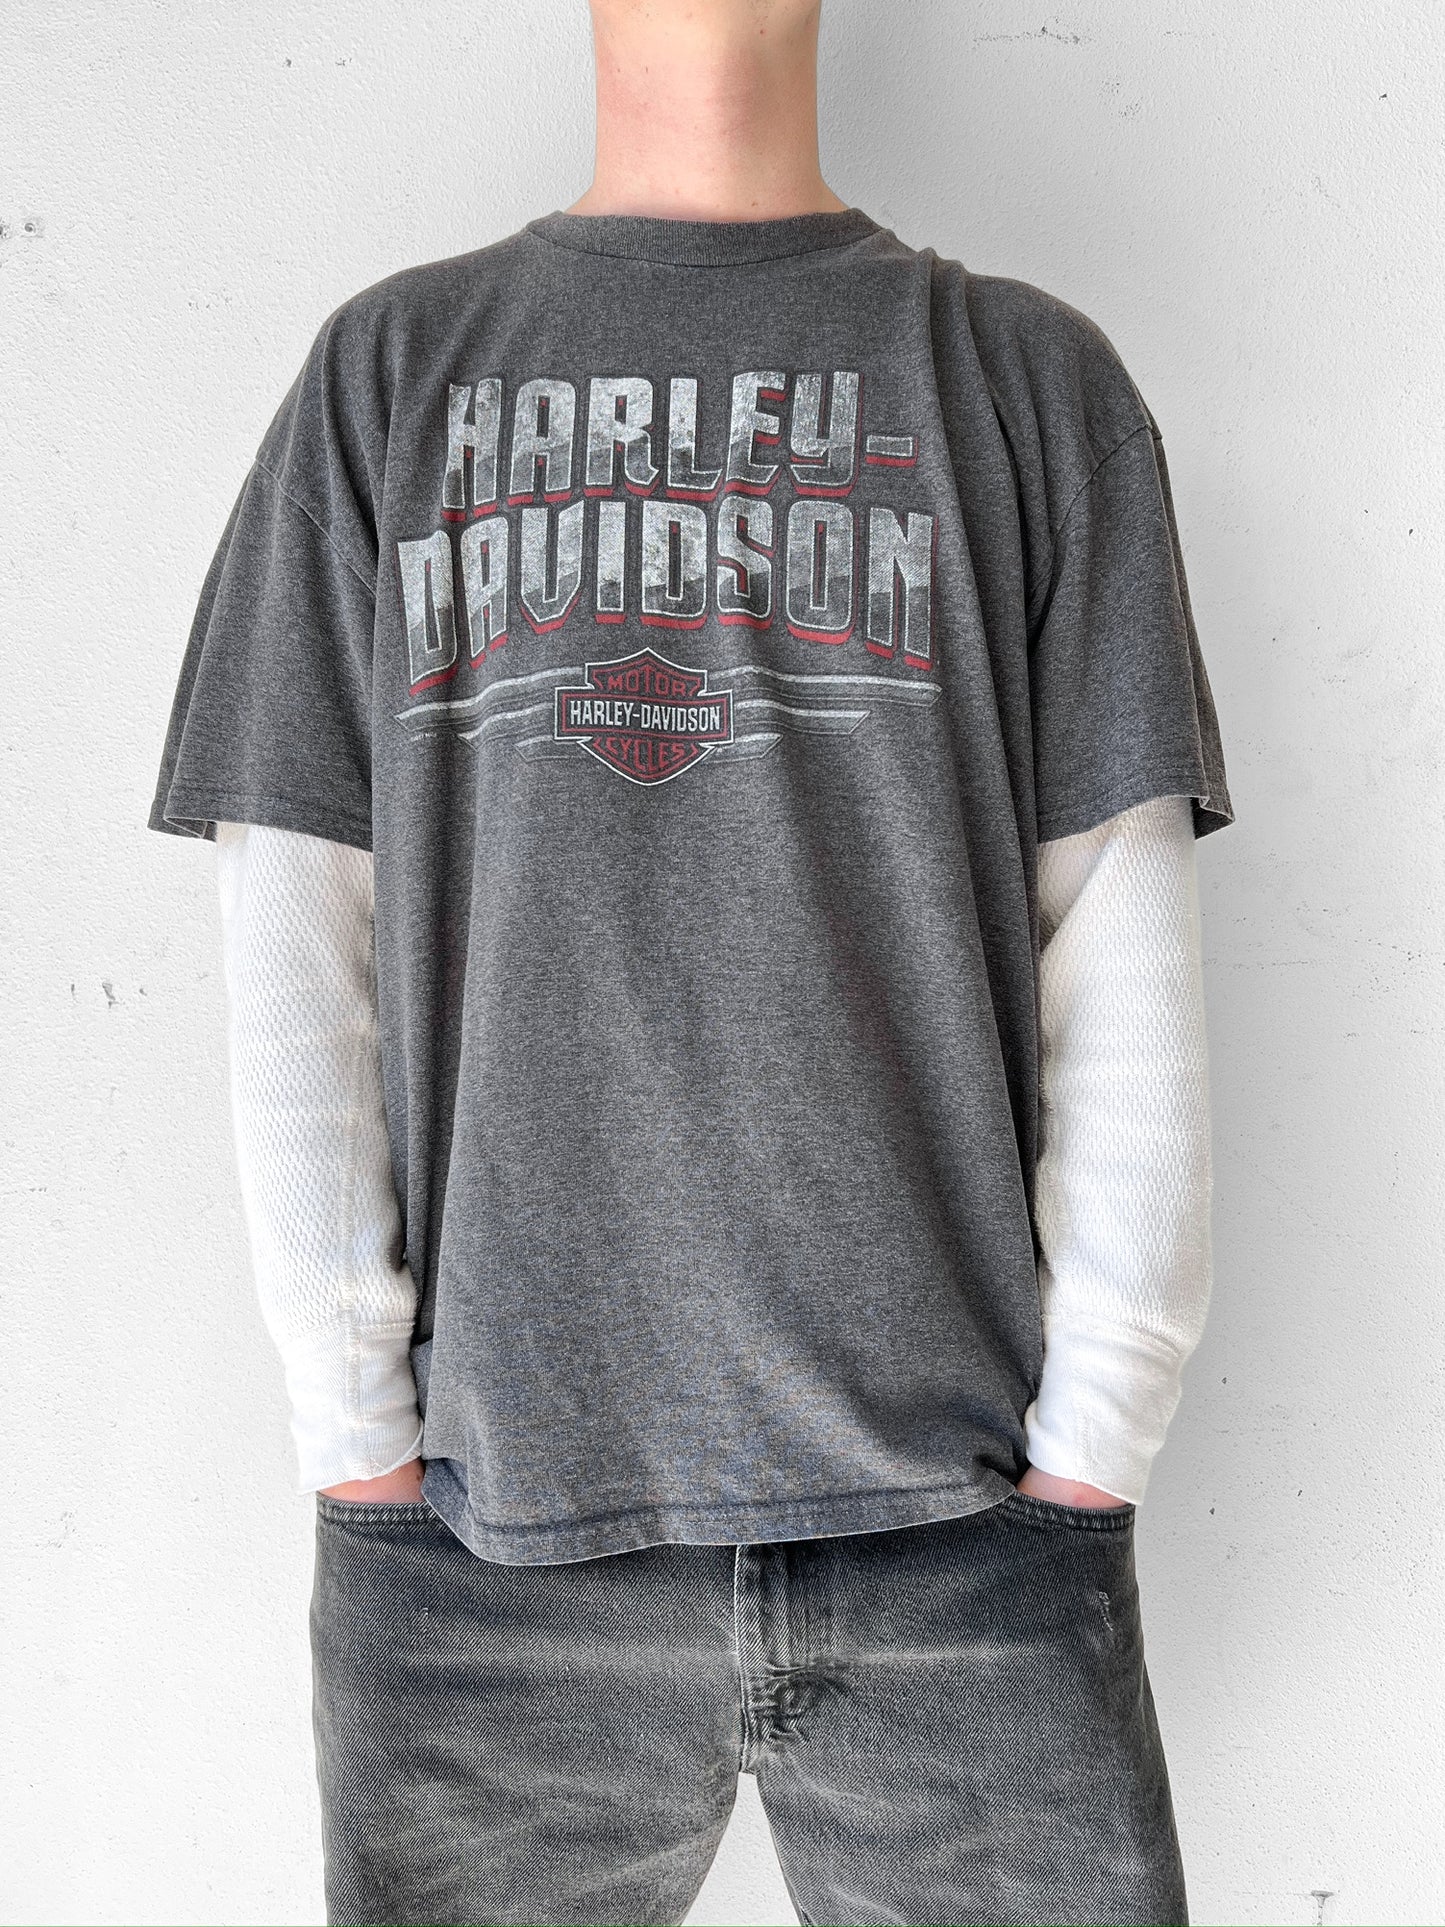 Harley Davidson Tigard Oregon Shirt  - XL